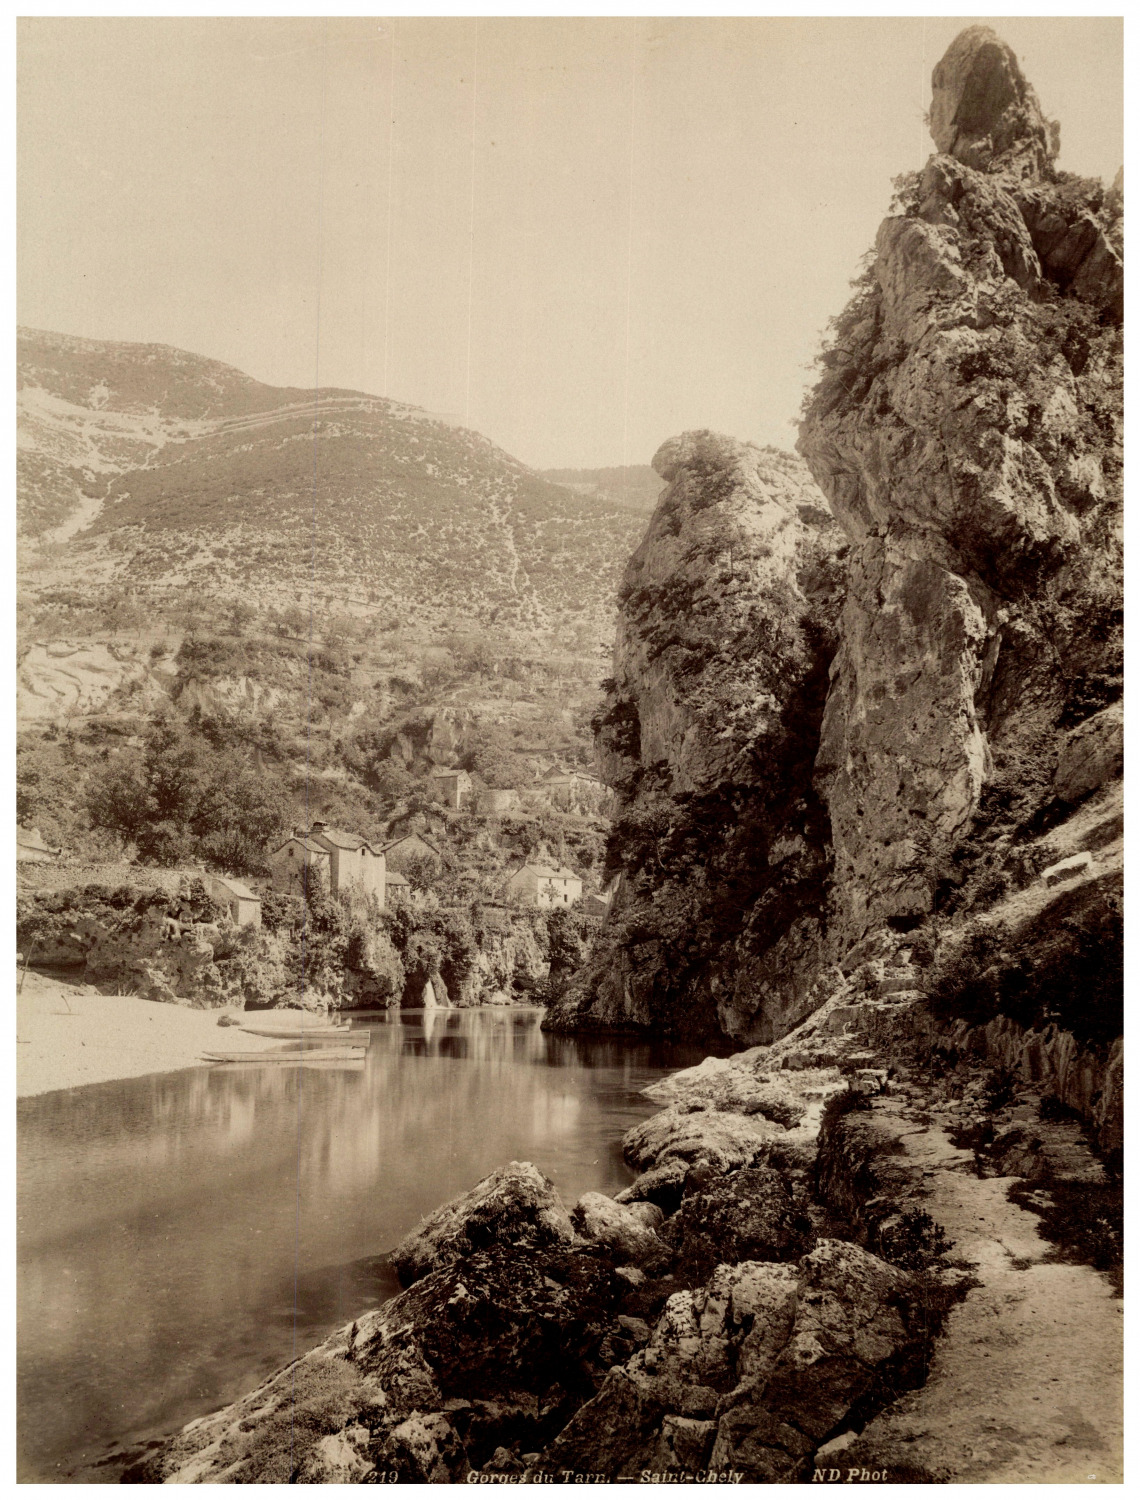 France, Gorges du Tarn, Saint-Chely, photo. N.D. Vintage print, albumi print run